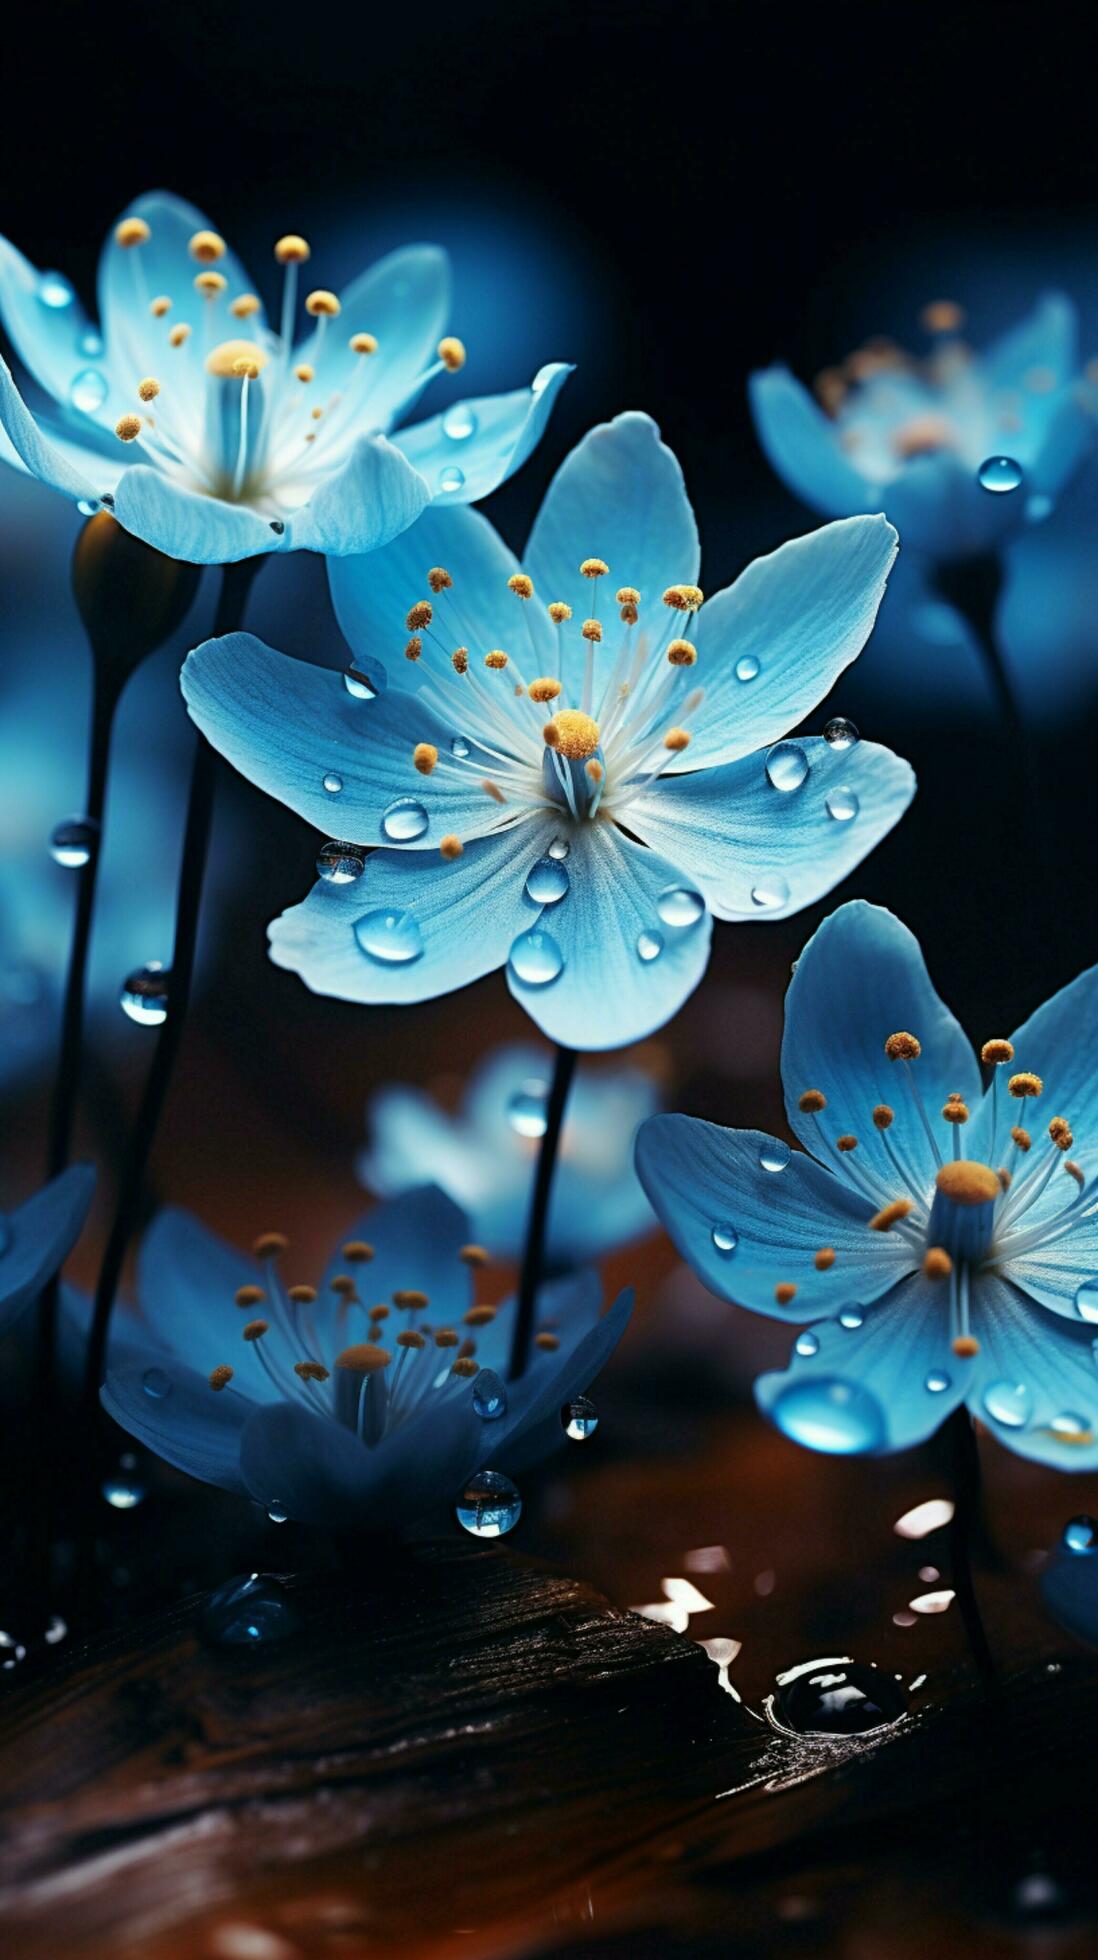 Blue Hued Magic Spring Flowers In Focus